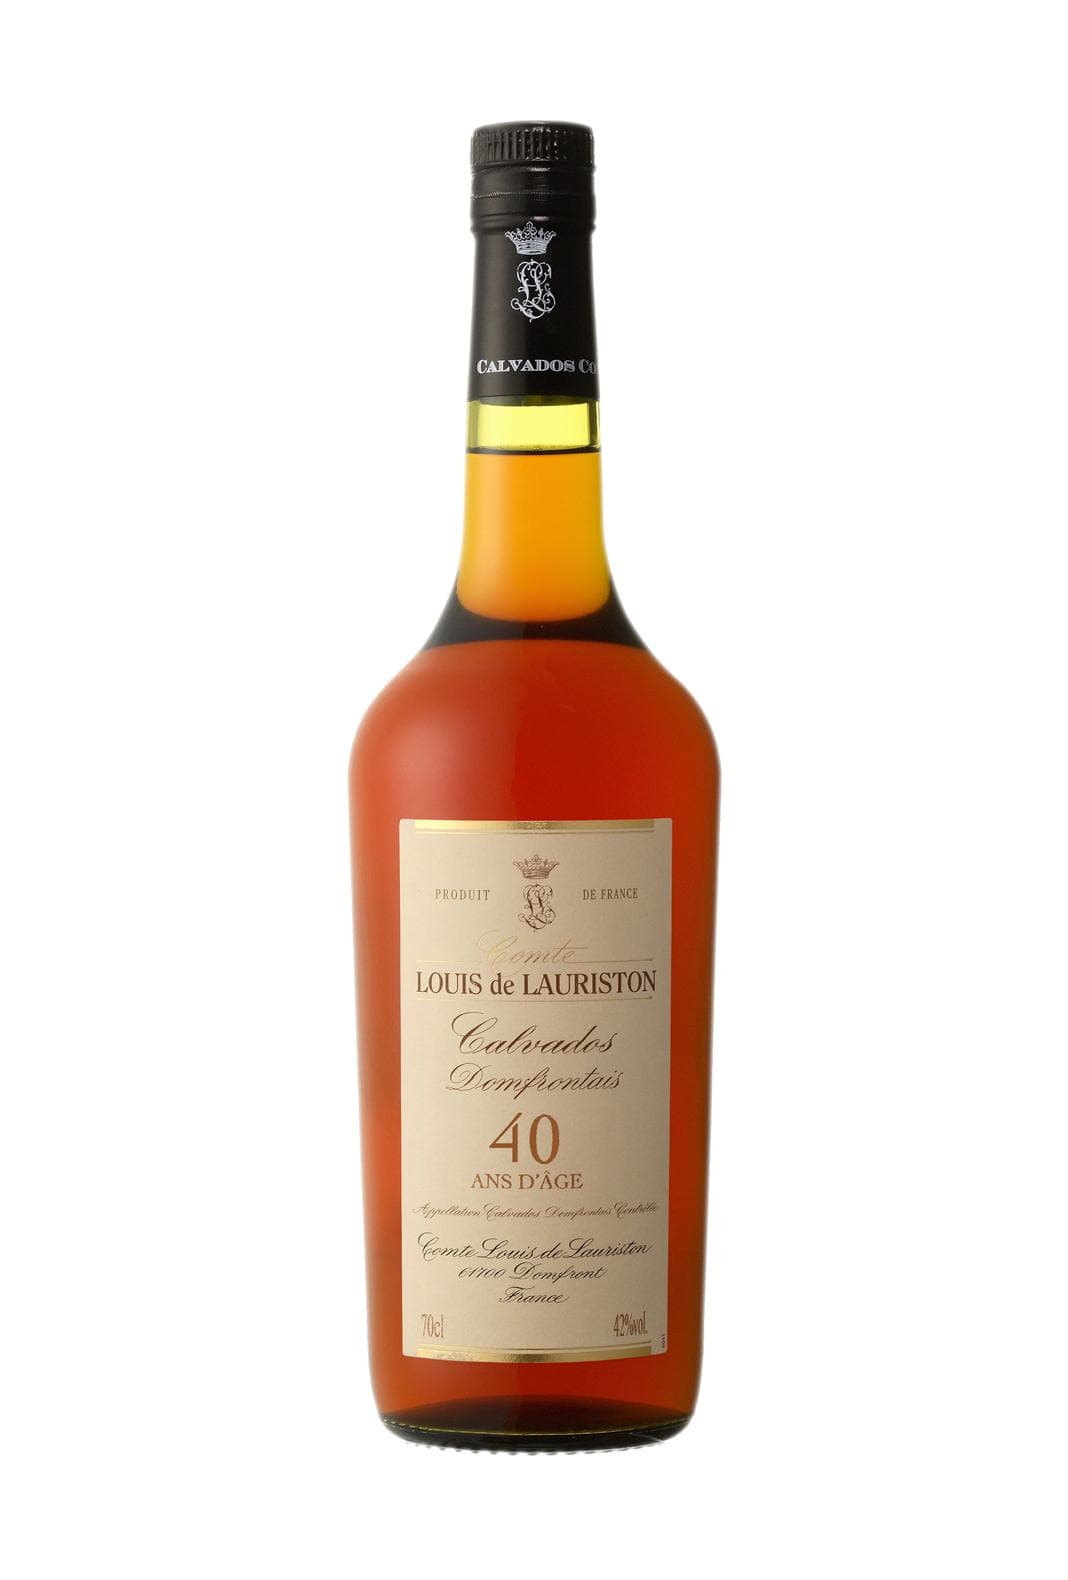 Comte Louis de Lauriston Calvados Domfrontais 40 years 42% 700ml | Brandy | Shop online at Spirits of France